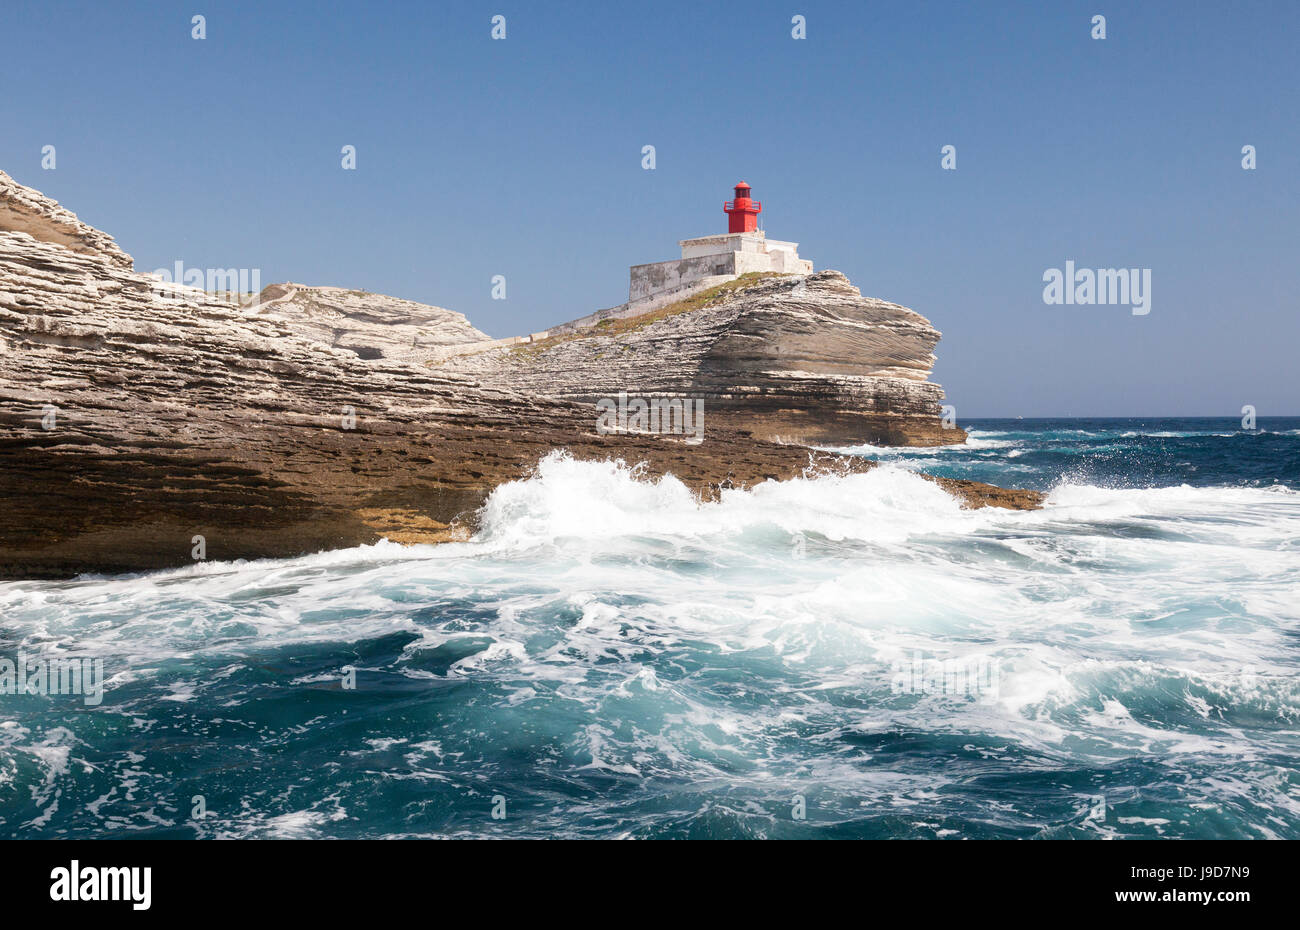 Waves of the turquoise sea crashing on the granite white cliffs and lighthouse, Lavezzi Islands, Bonifacio, Corsica, France Stock Photo